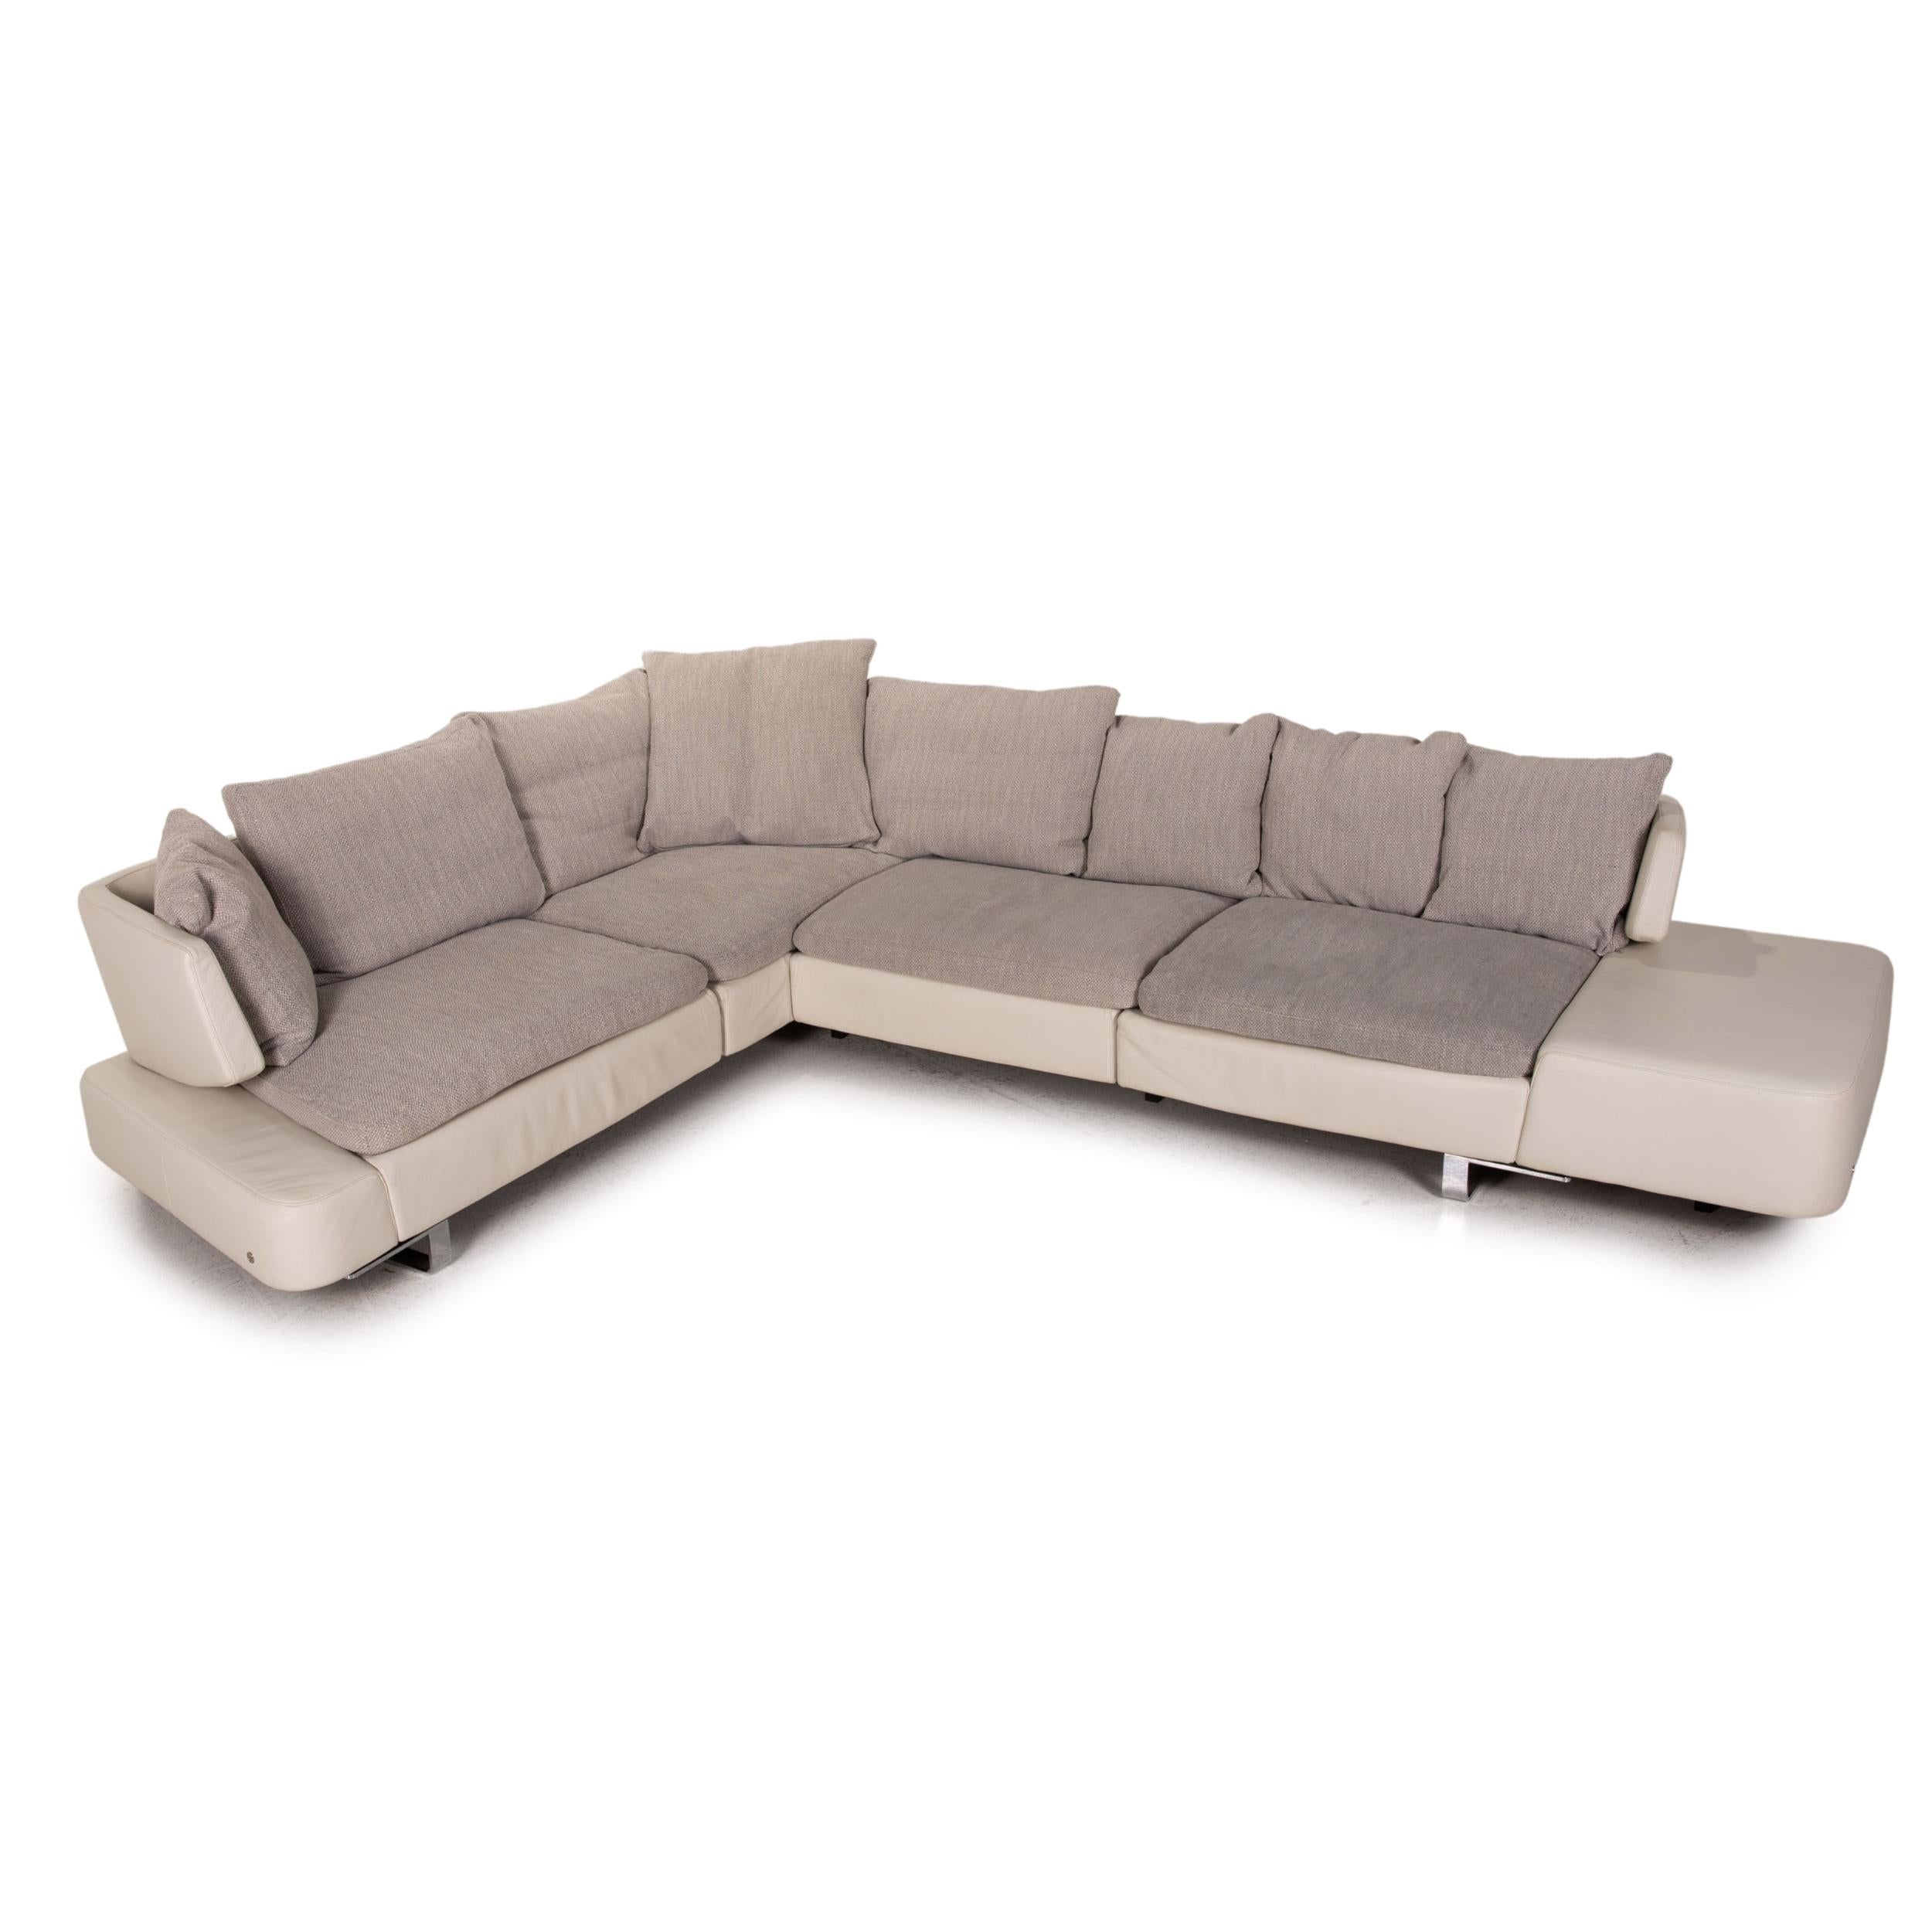 Natuzzi Opus Leather Fabric Corner Sofa Gray Cream Sofa Couch For Sale 2